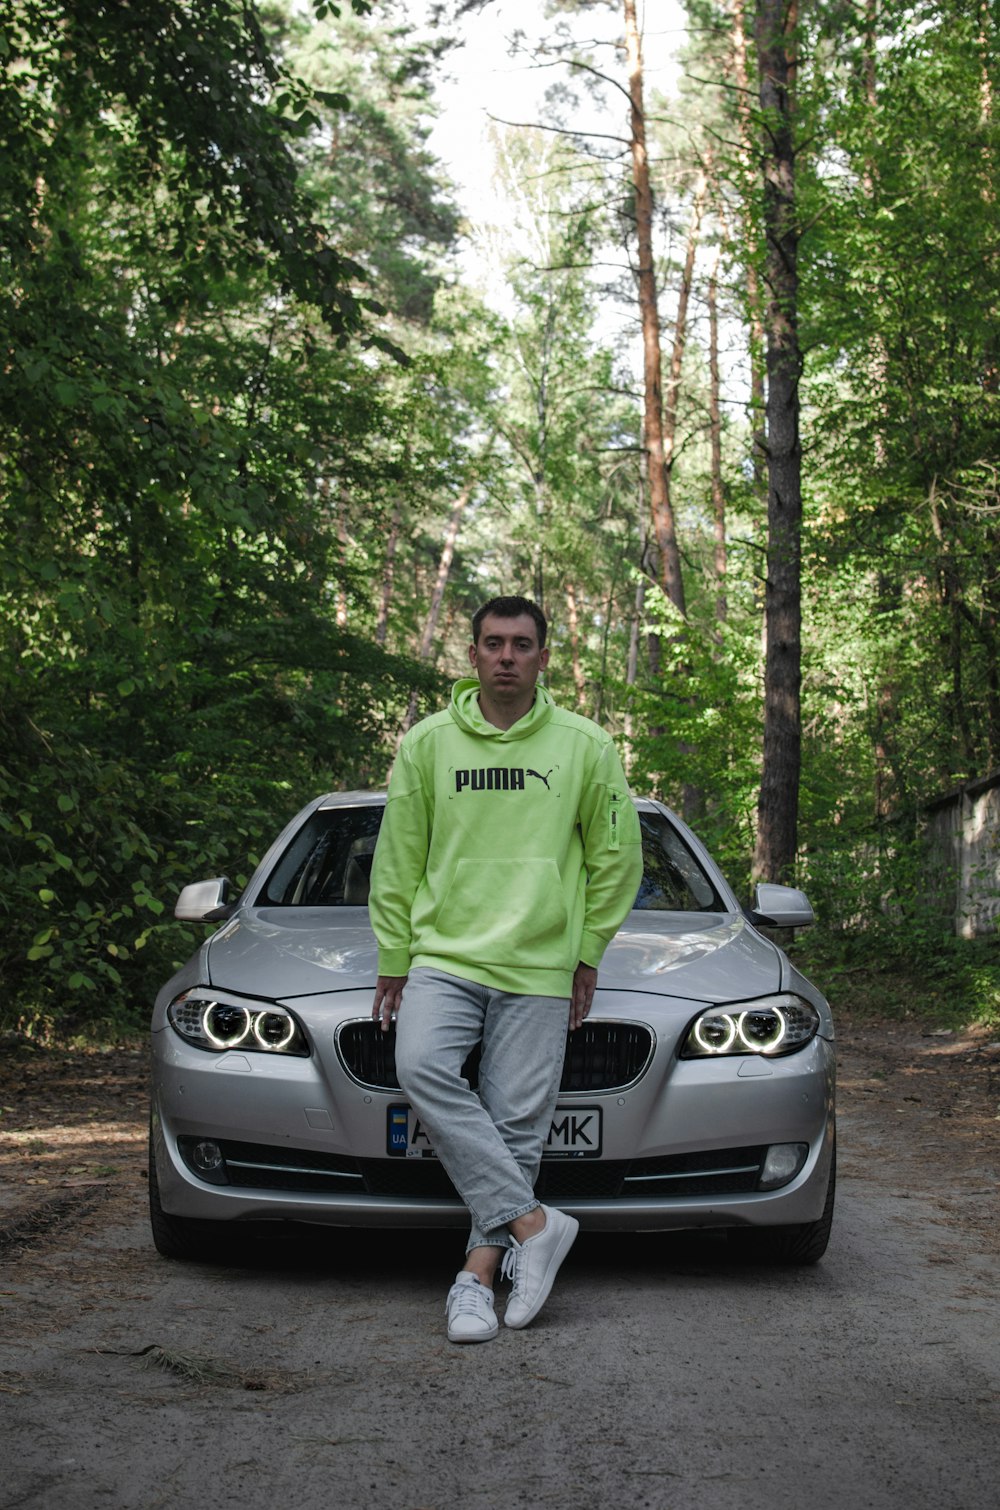 Mann im grünen Rundhals-T-Shirt neben silbernem Auto